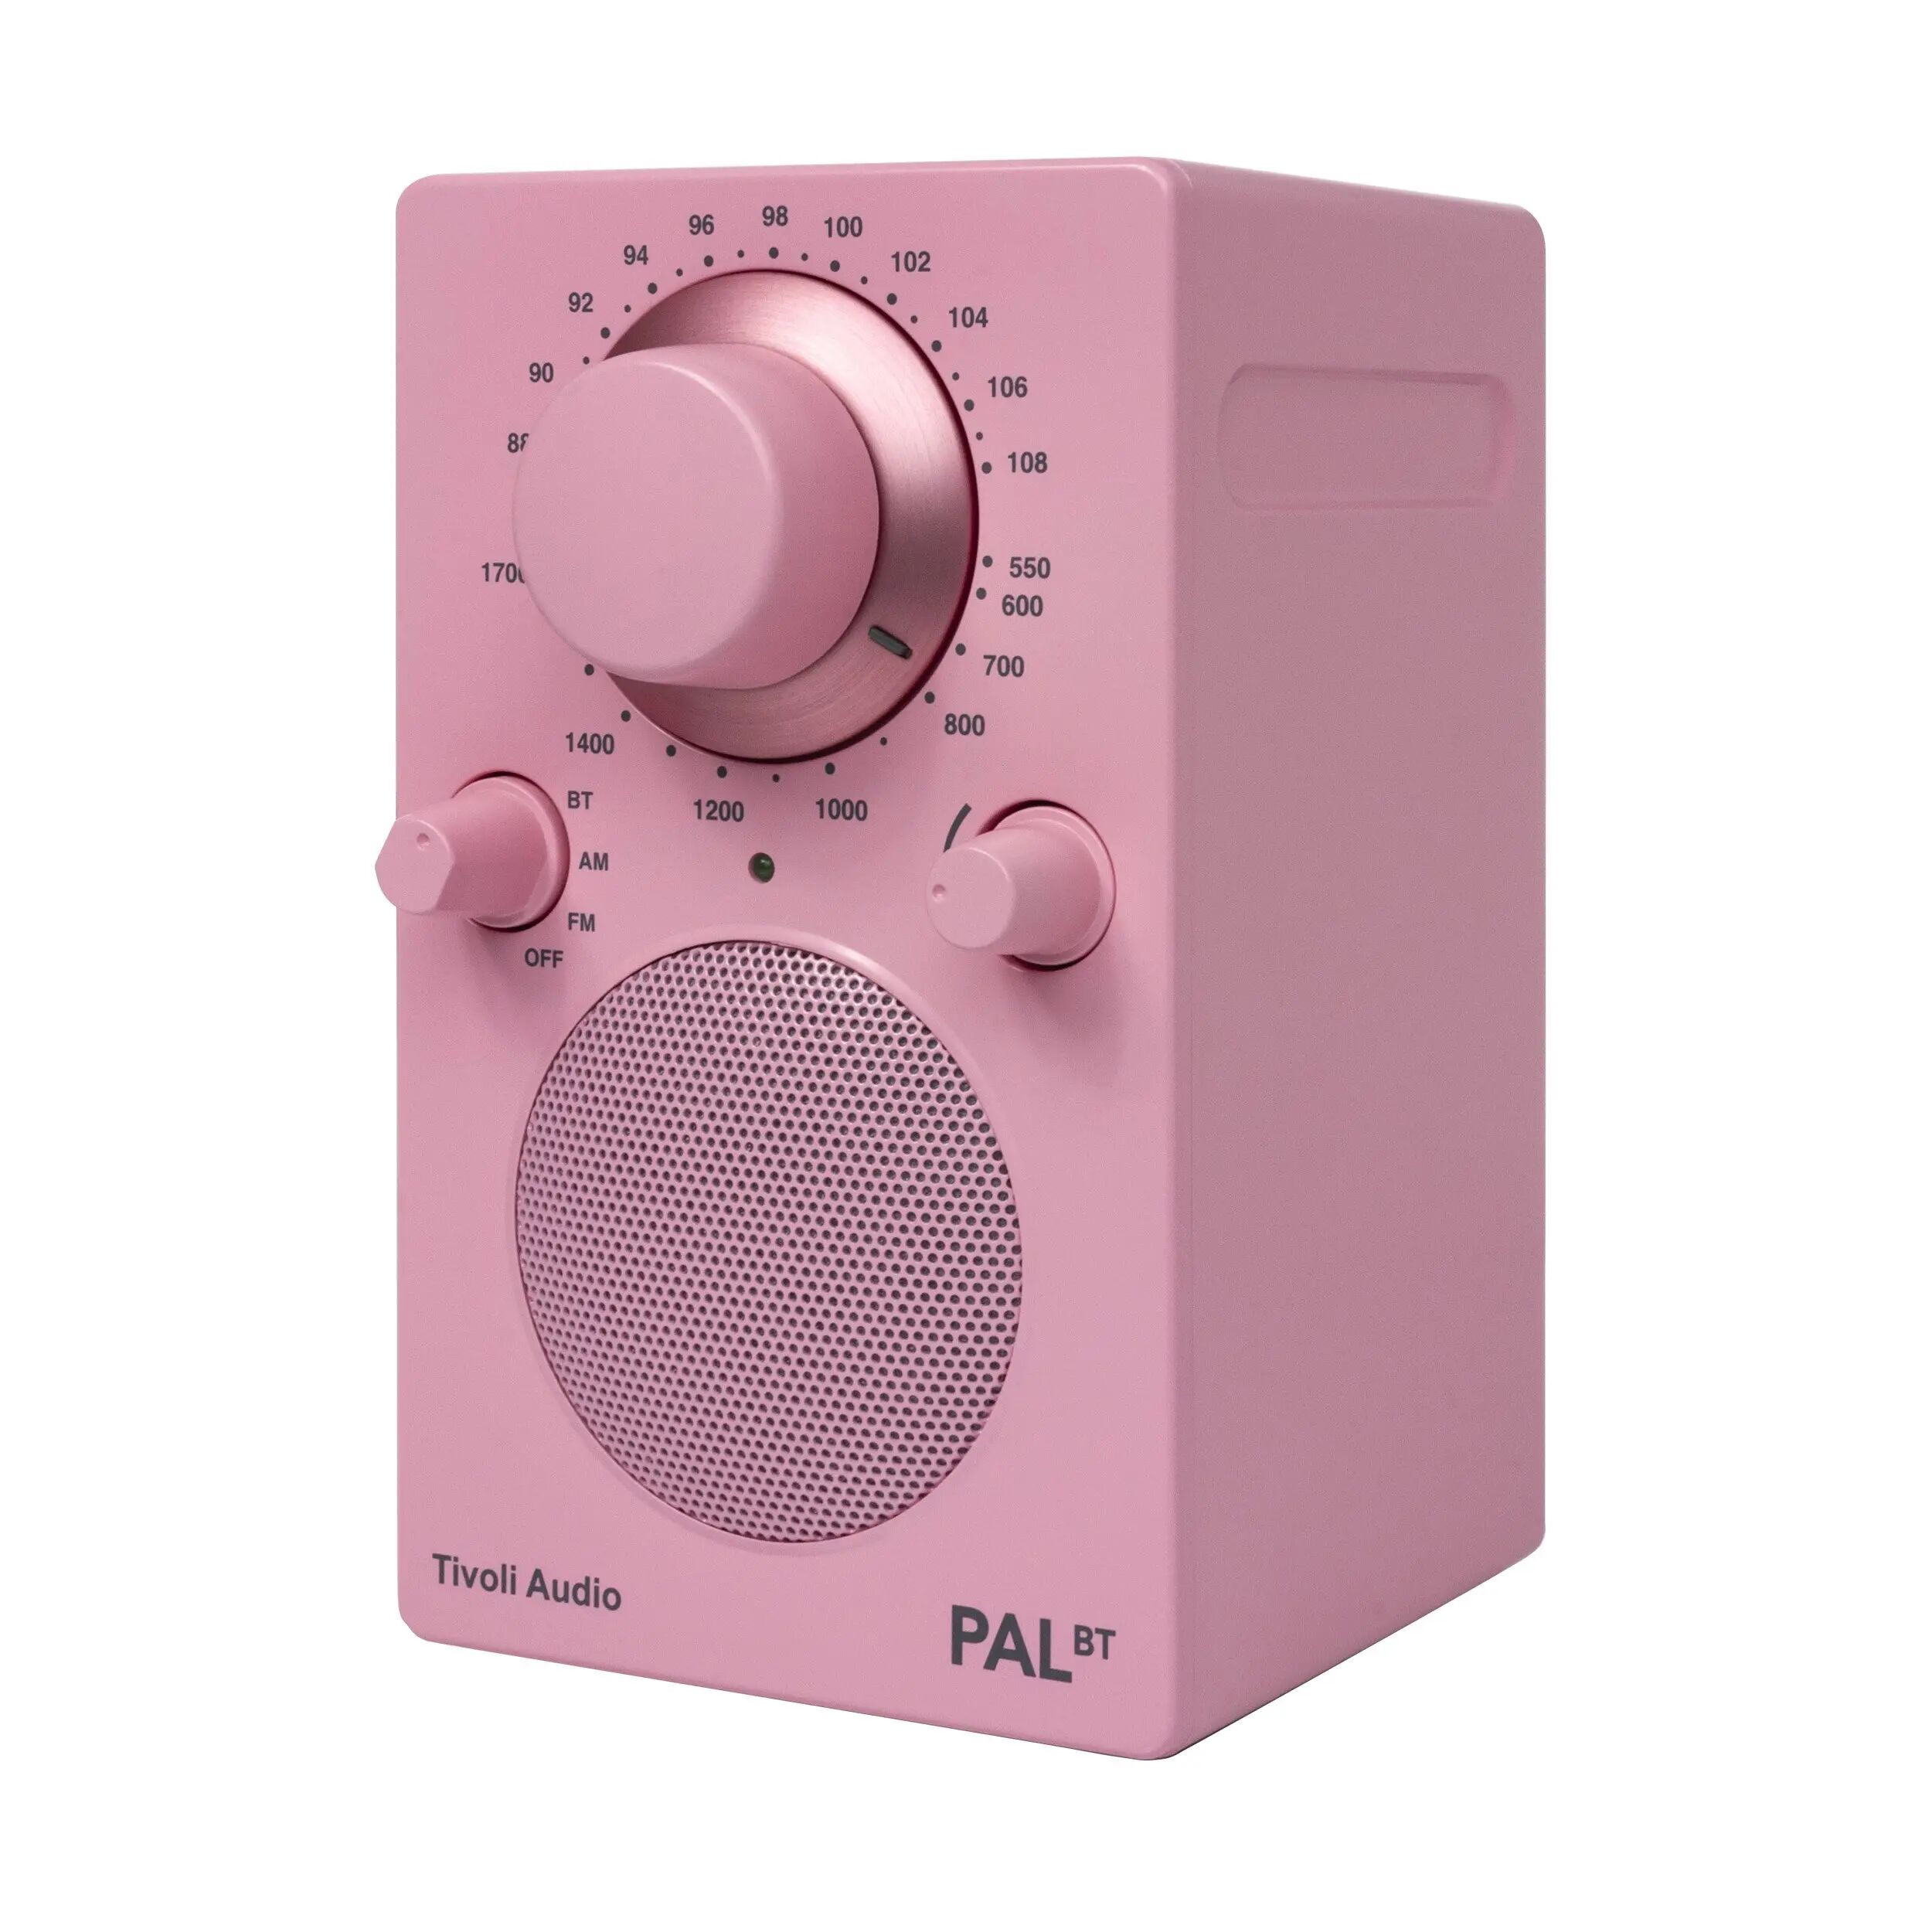 Tivoli Audio PAL BT Radio  pink